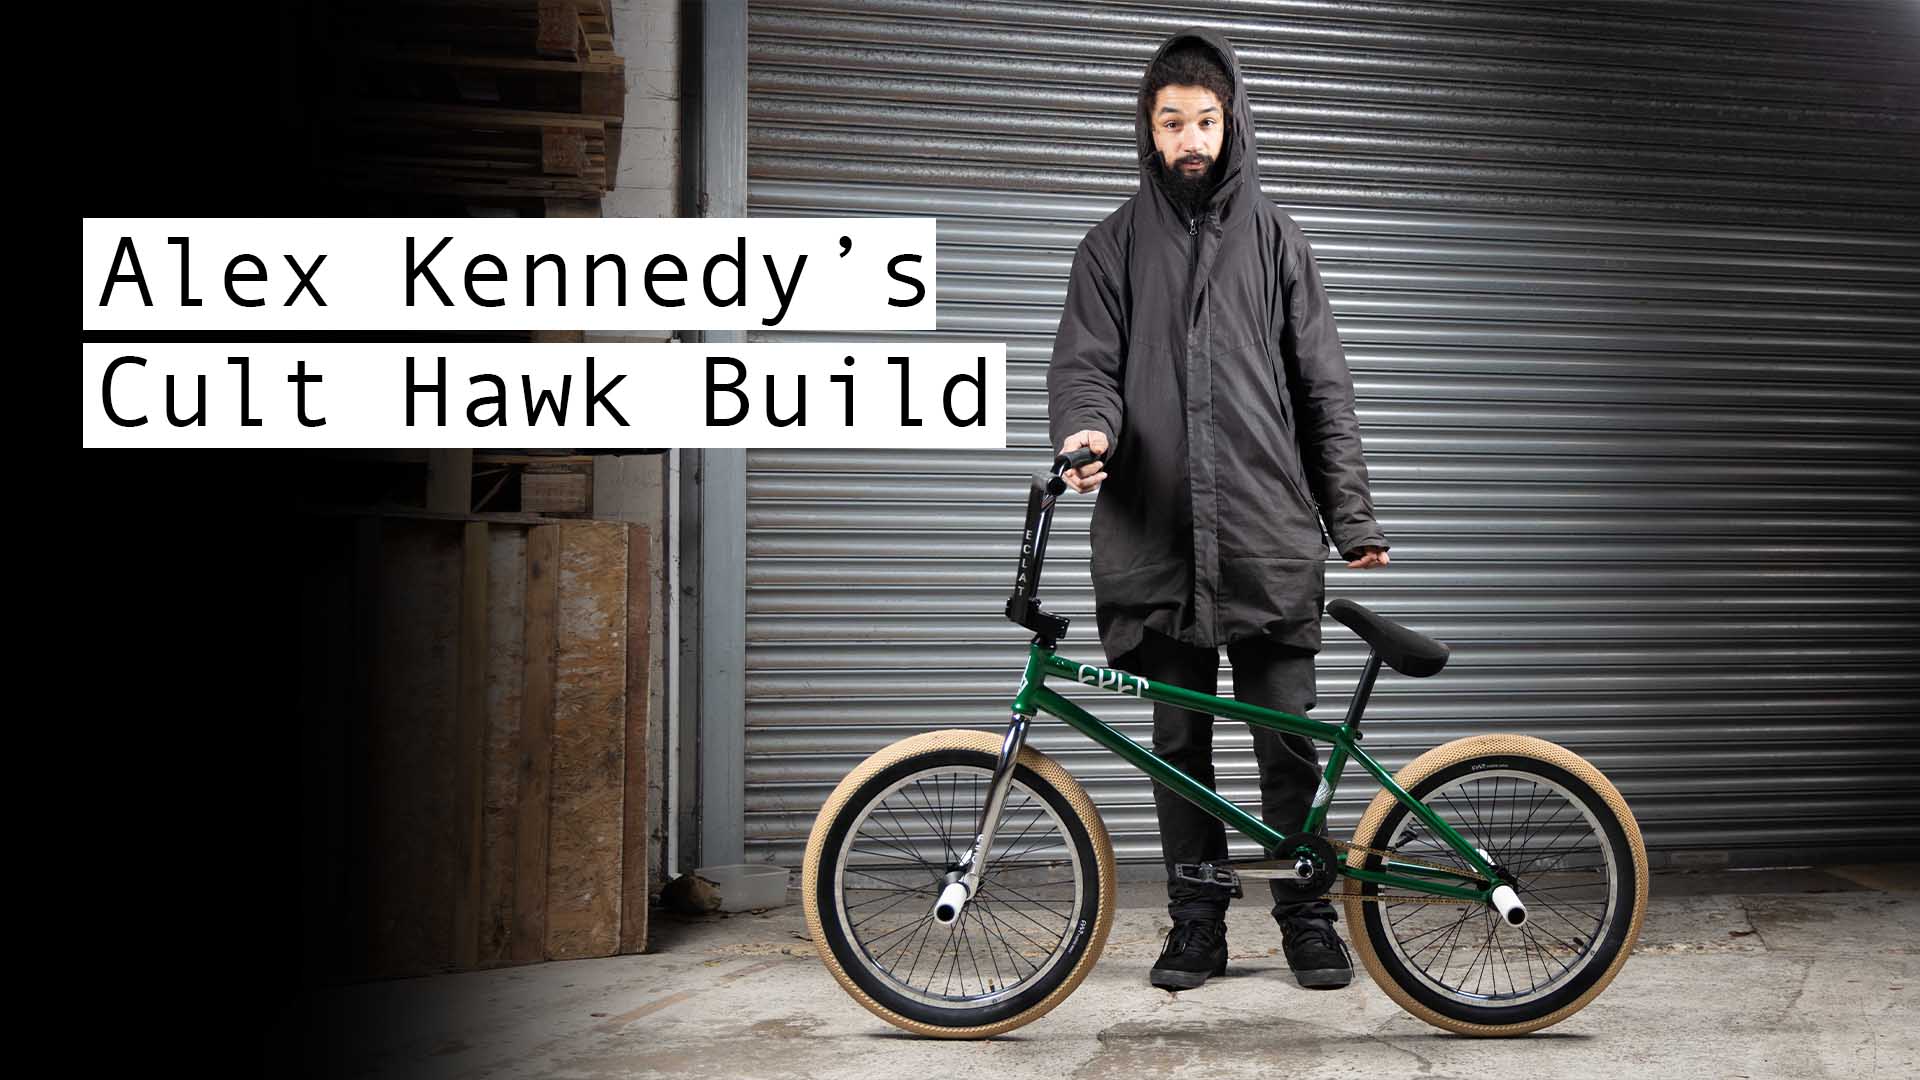 Bike Check - AK's Cult Hawk Build